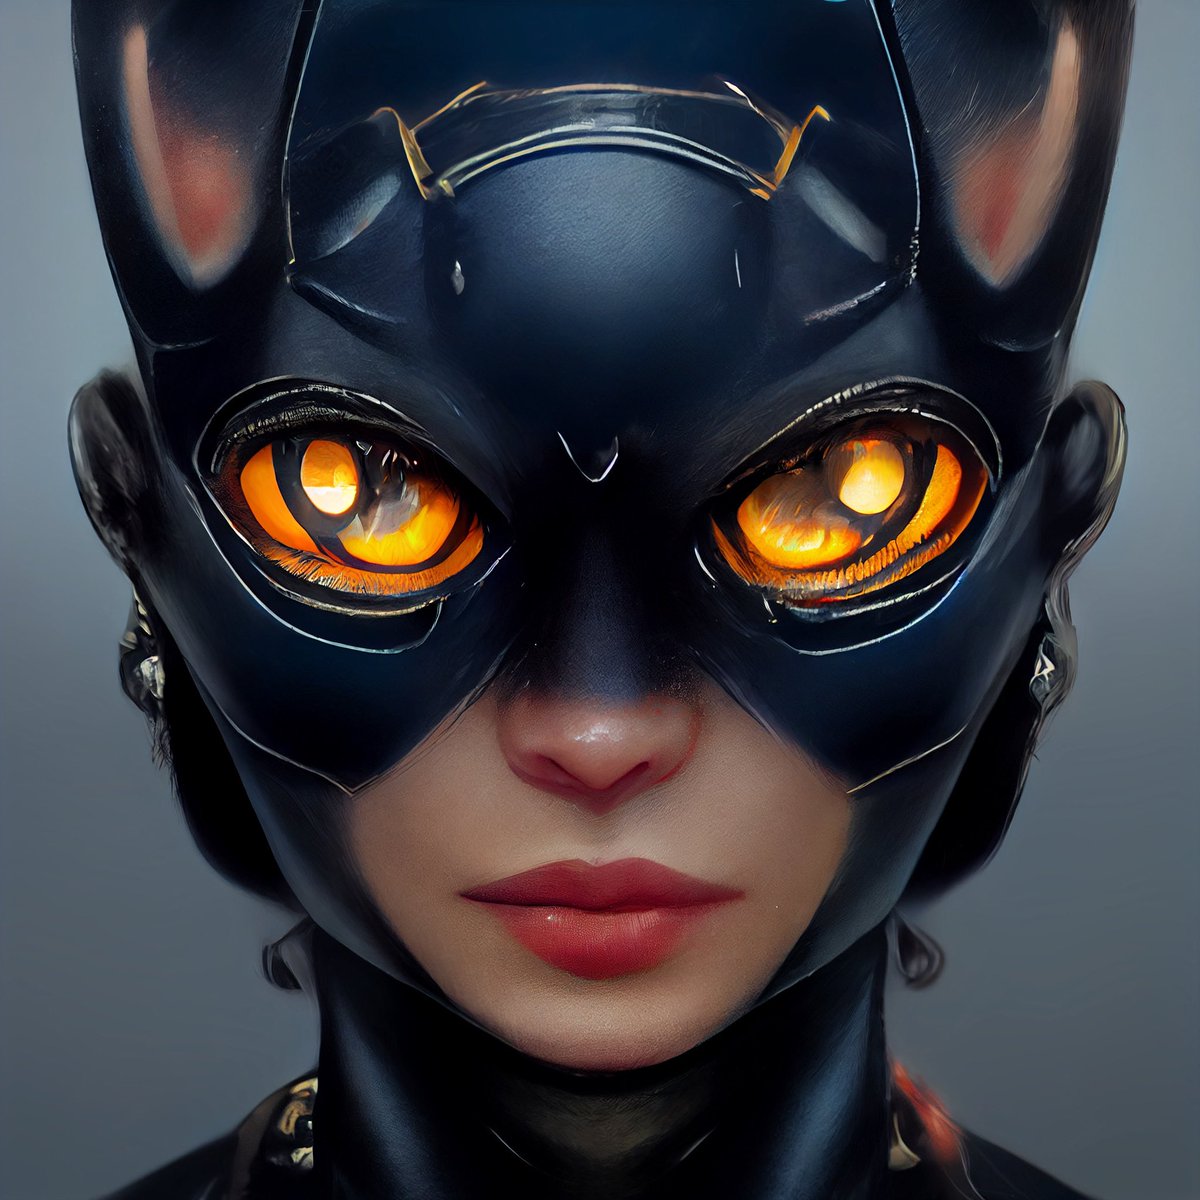 Robot Catwoman

#catwoman #catwomancomics #catwomanart #catwoman🐱 #dccomics #dcuniverse #superhero #robot #robots #midjourney #midjourneyart #midjourneyai #midjourneyartwork #generativeart #aiart #aiartcommunity #aiartwork #aiartists #midjourneyaiart #midjourneycommunity